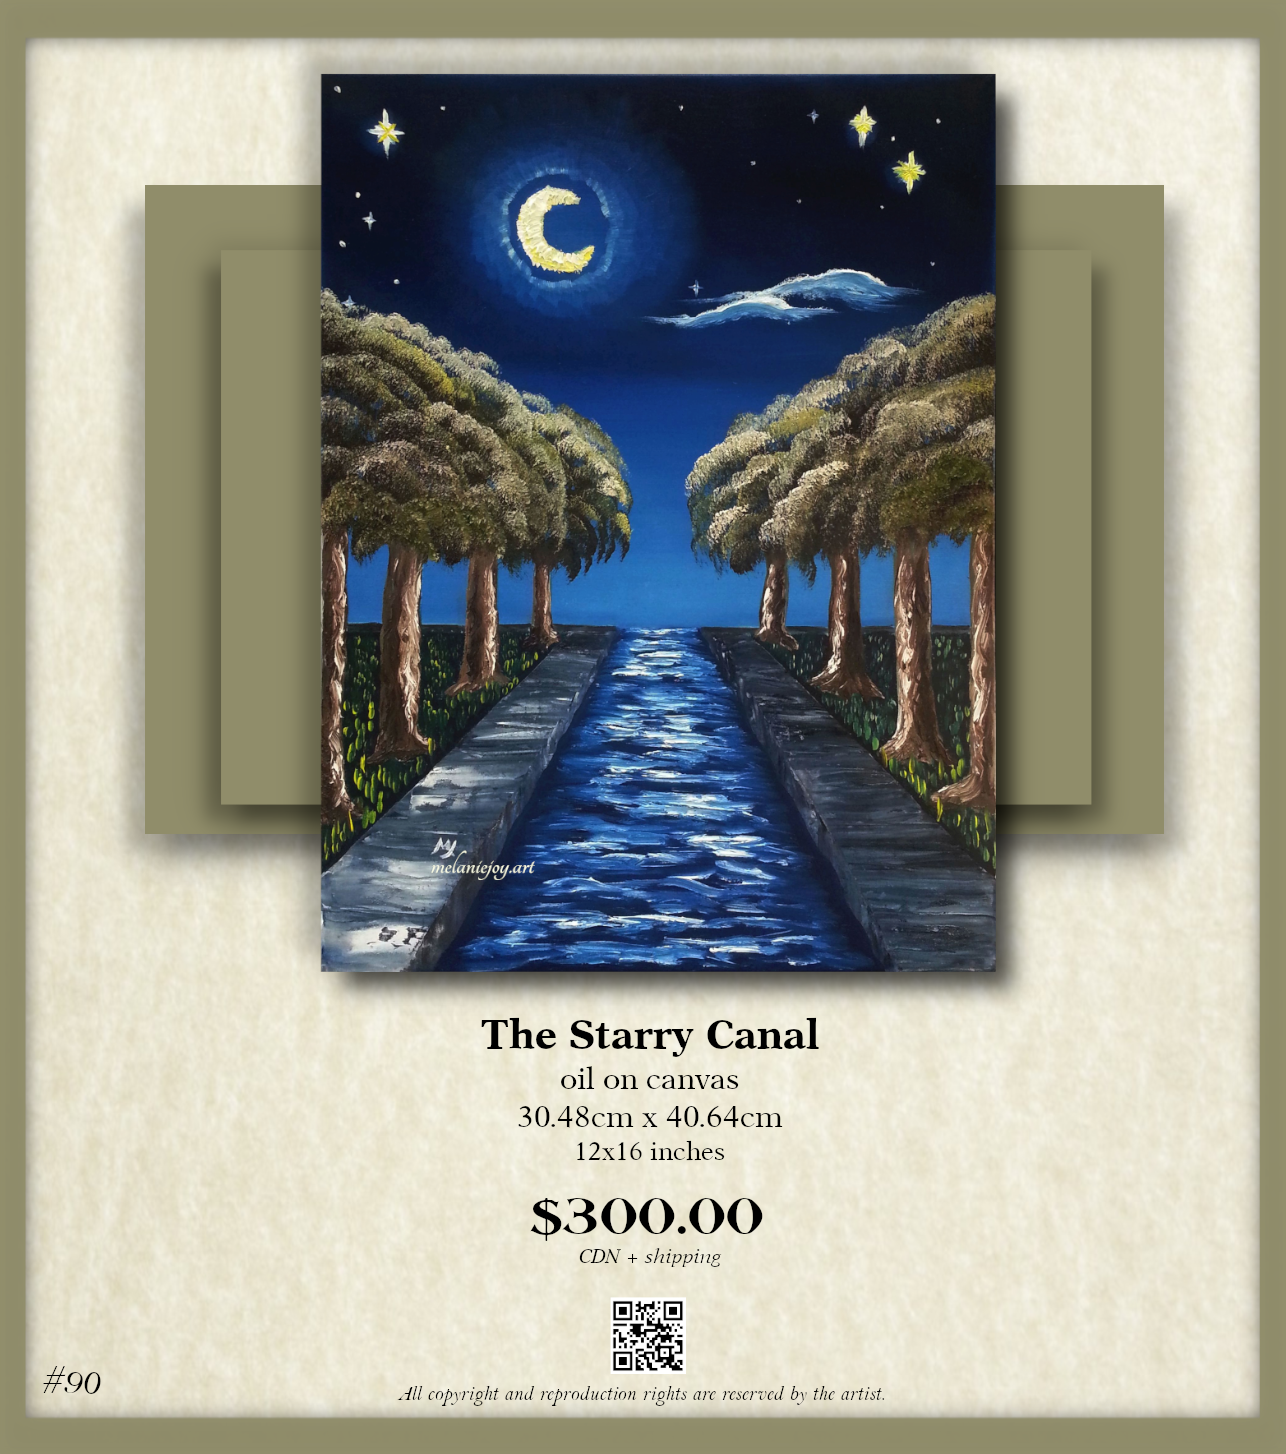 The Starry Canal oil on canvas for sale melaniejoyart